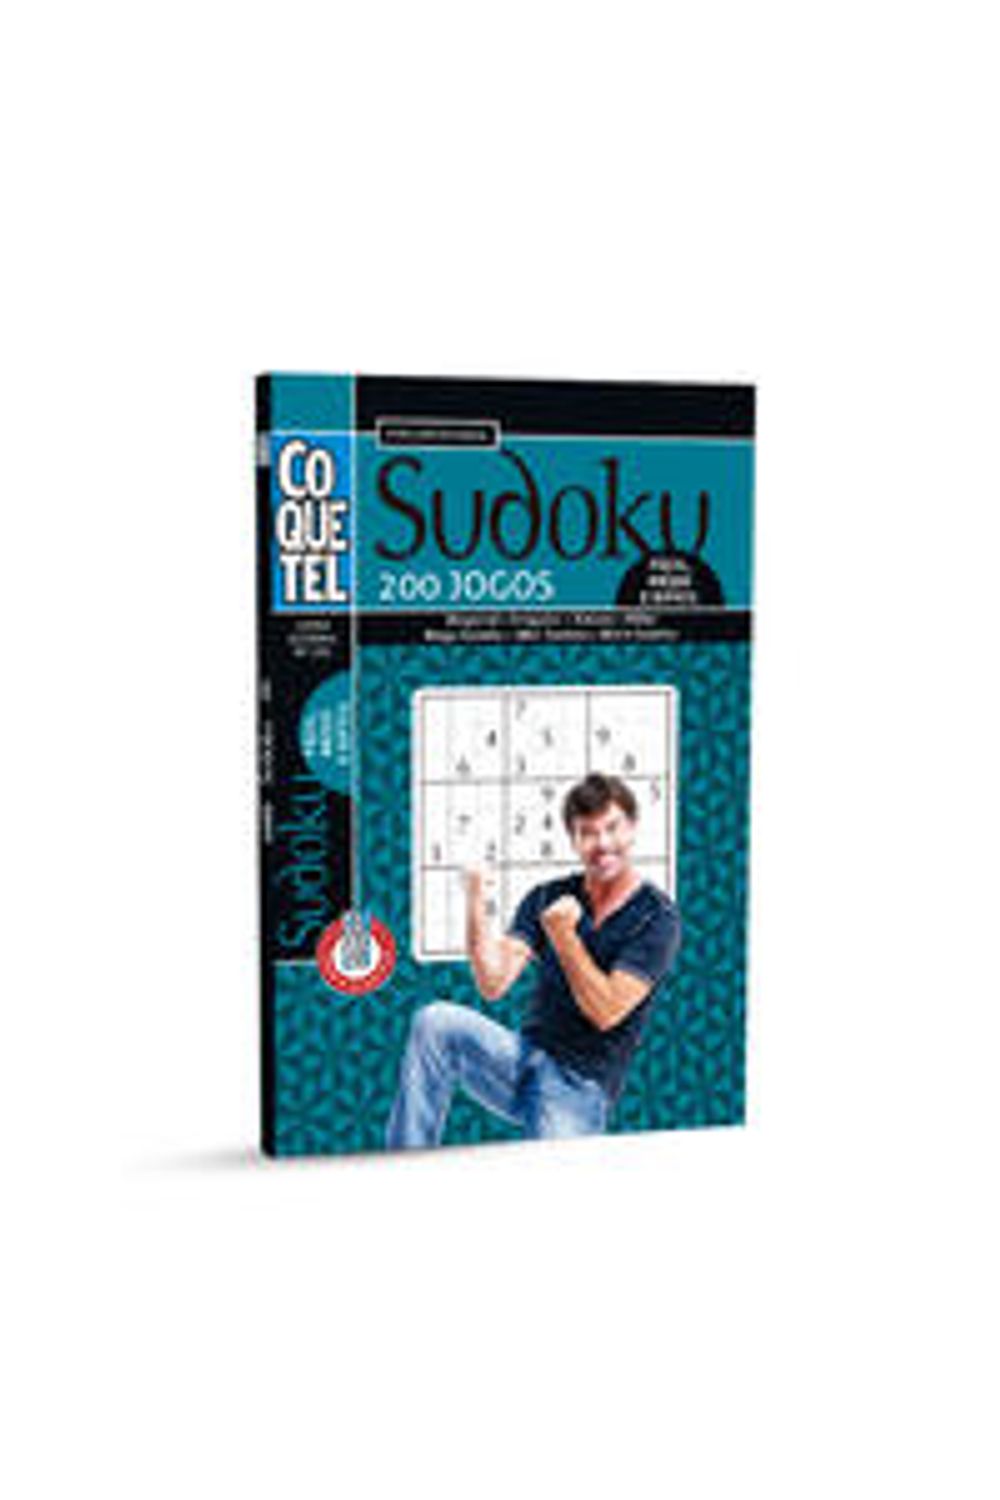 Livro Coquetel Desafios de Lógica Ed 25 by Equipe Coquetel